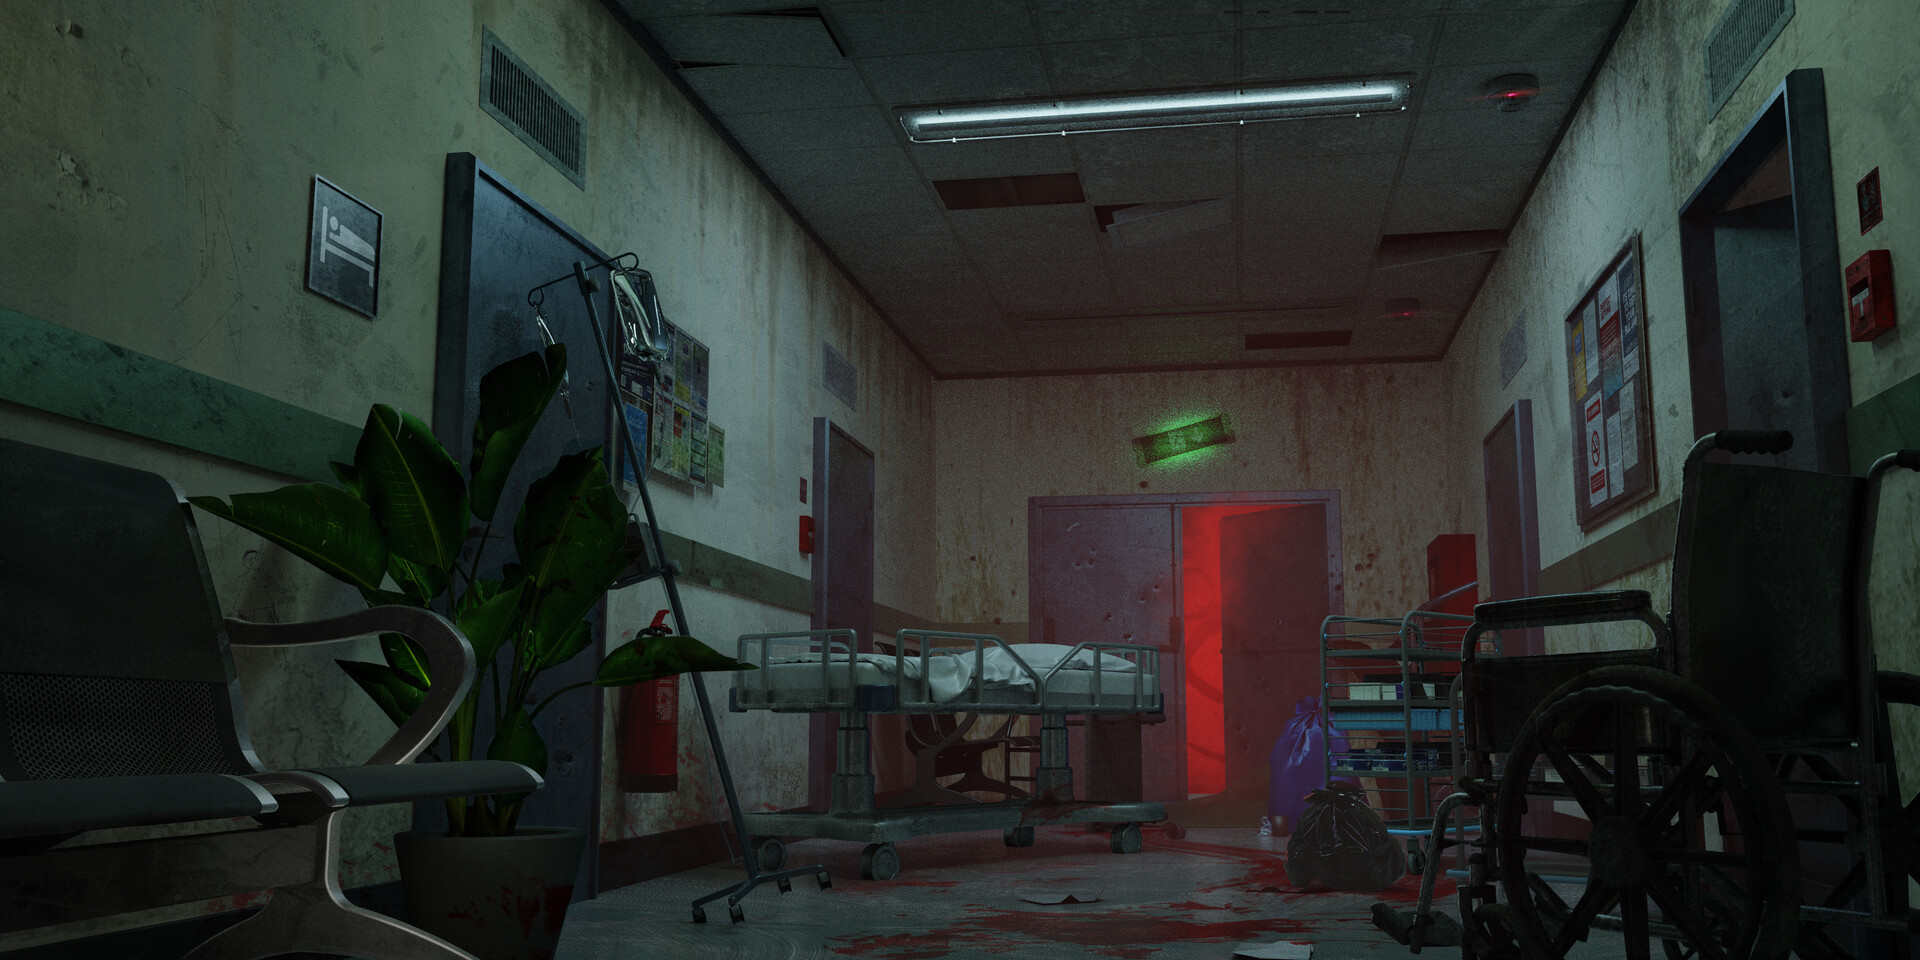 ArtStation - Spread terror in the hospital corridor